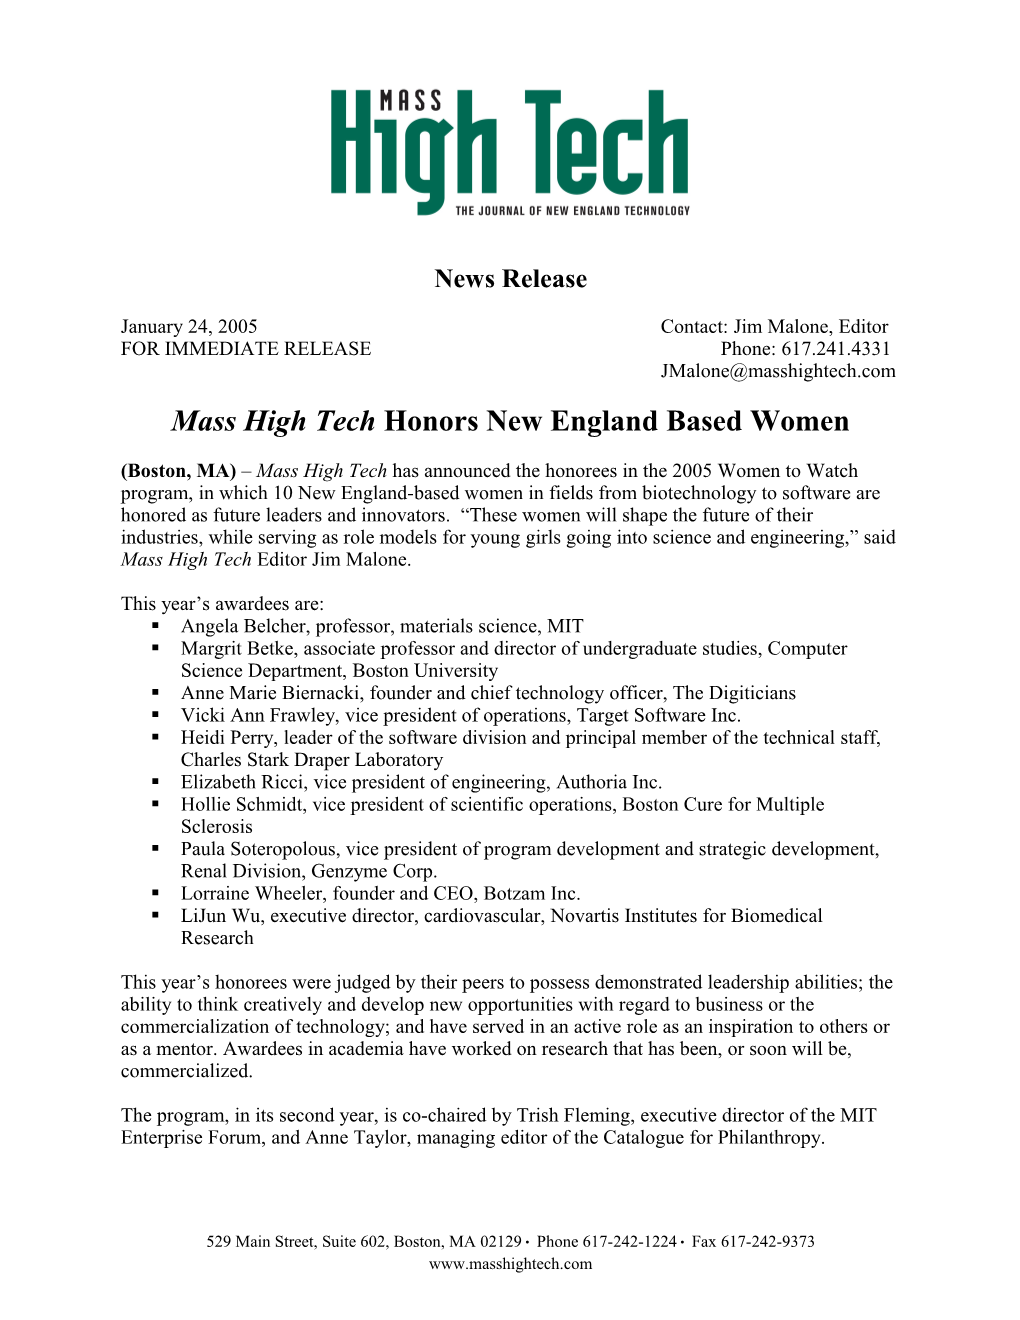 Mass High Tech Honors New England Based Women